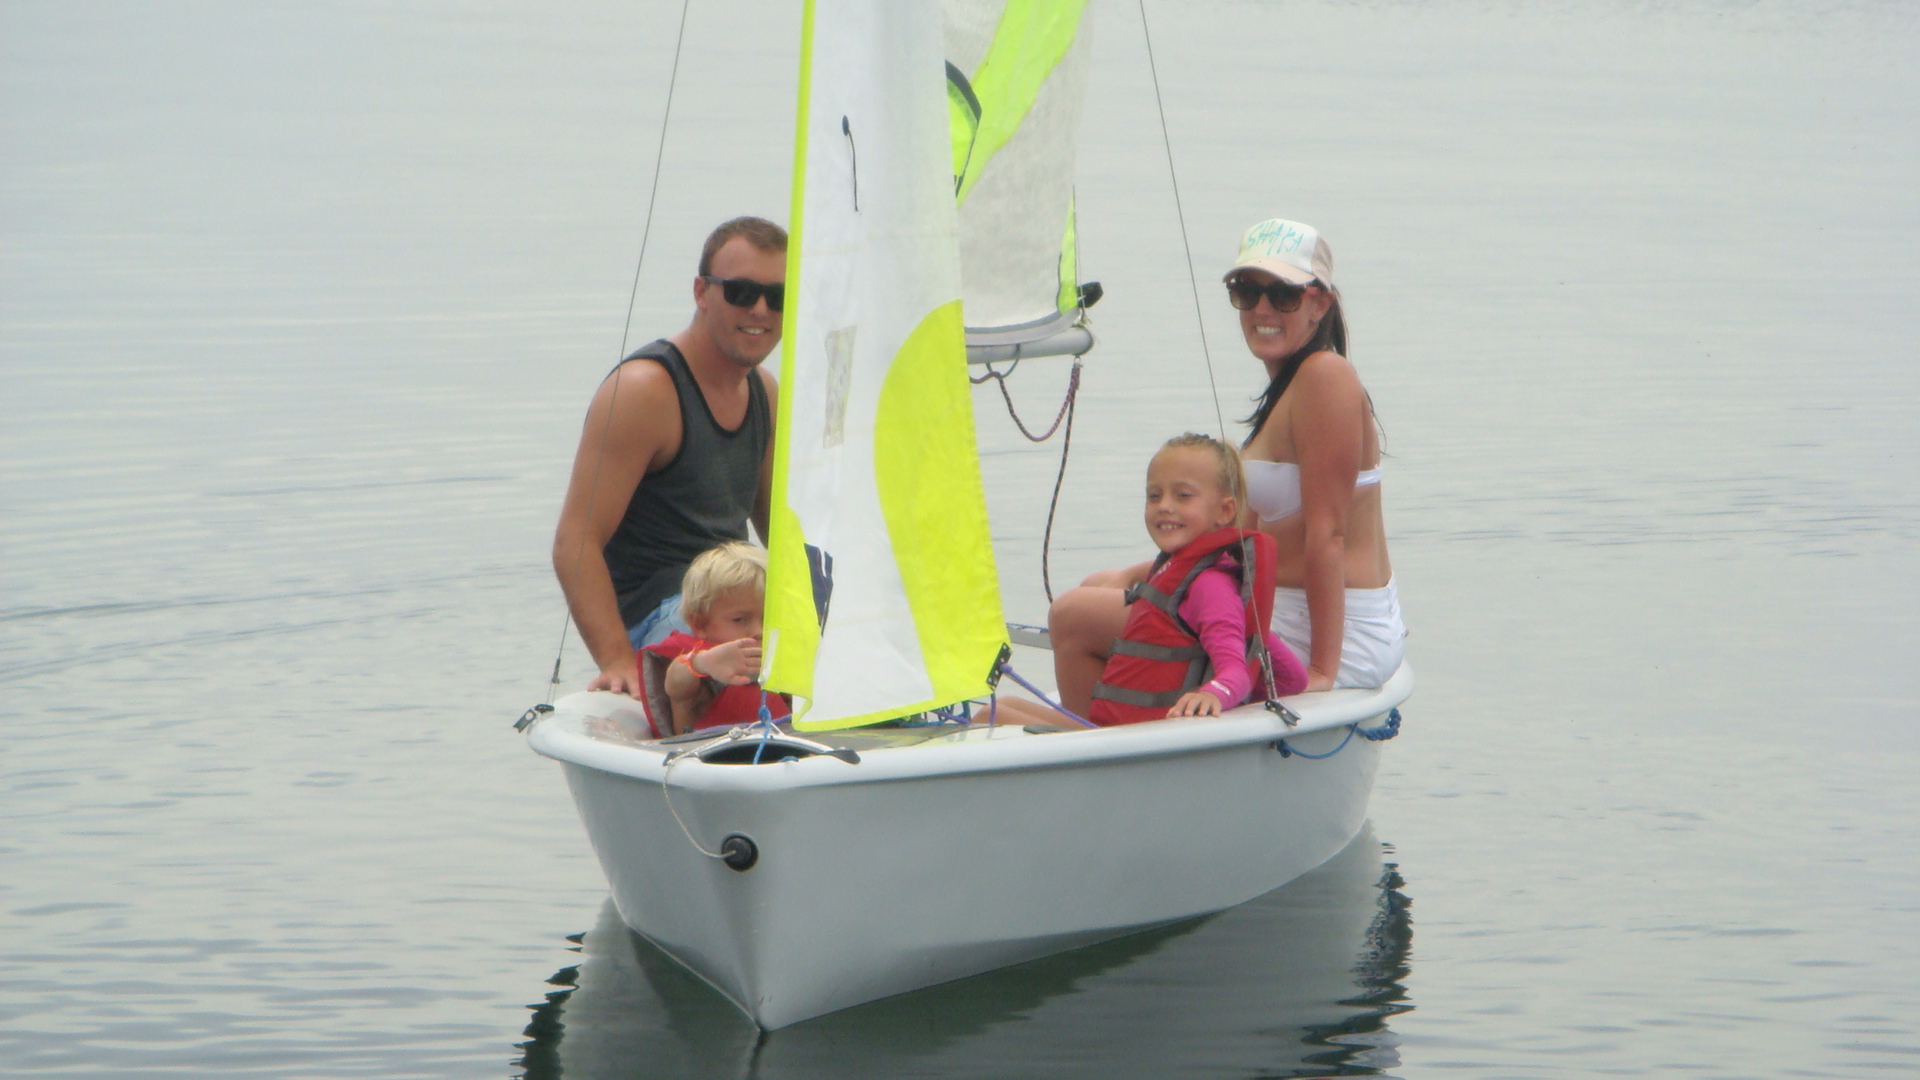 The McGhees in their sailboat